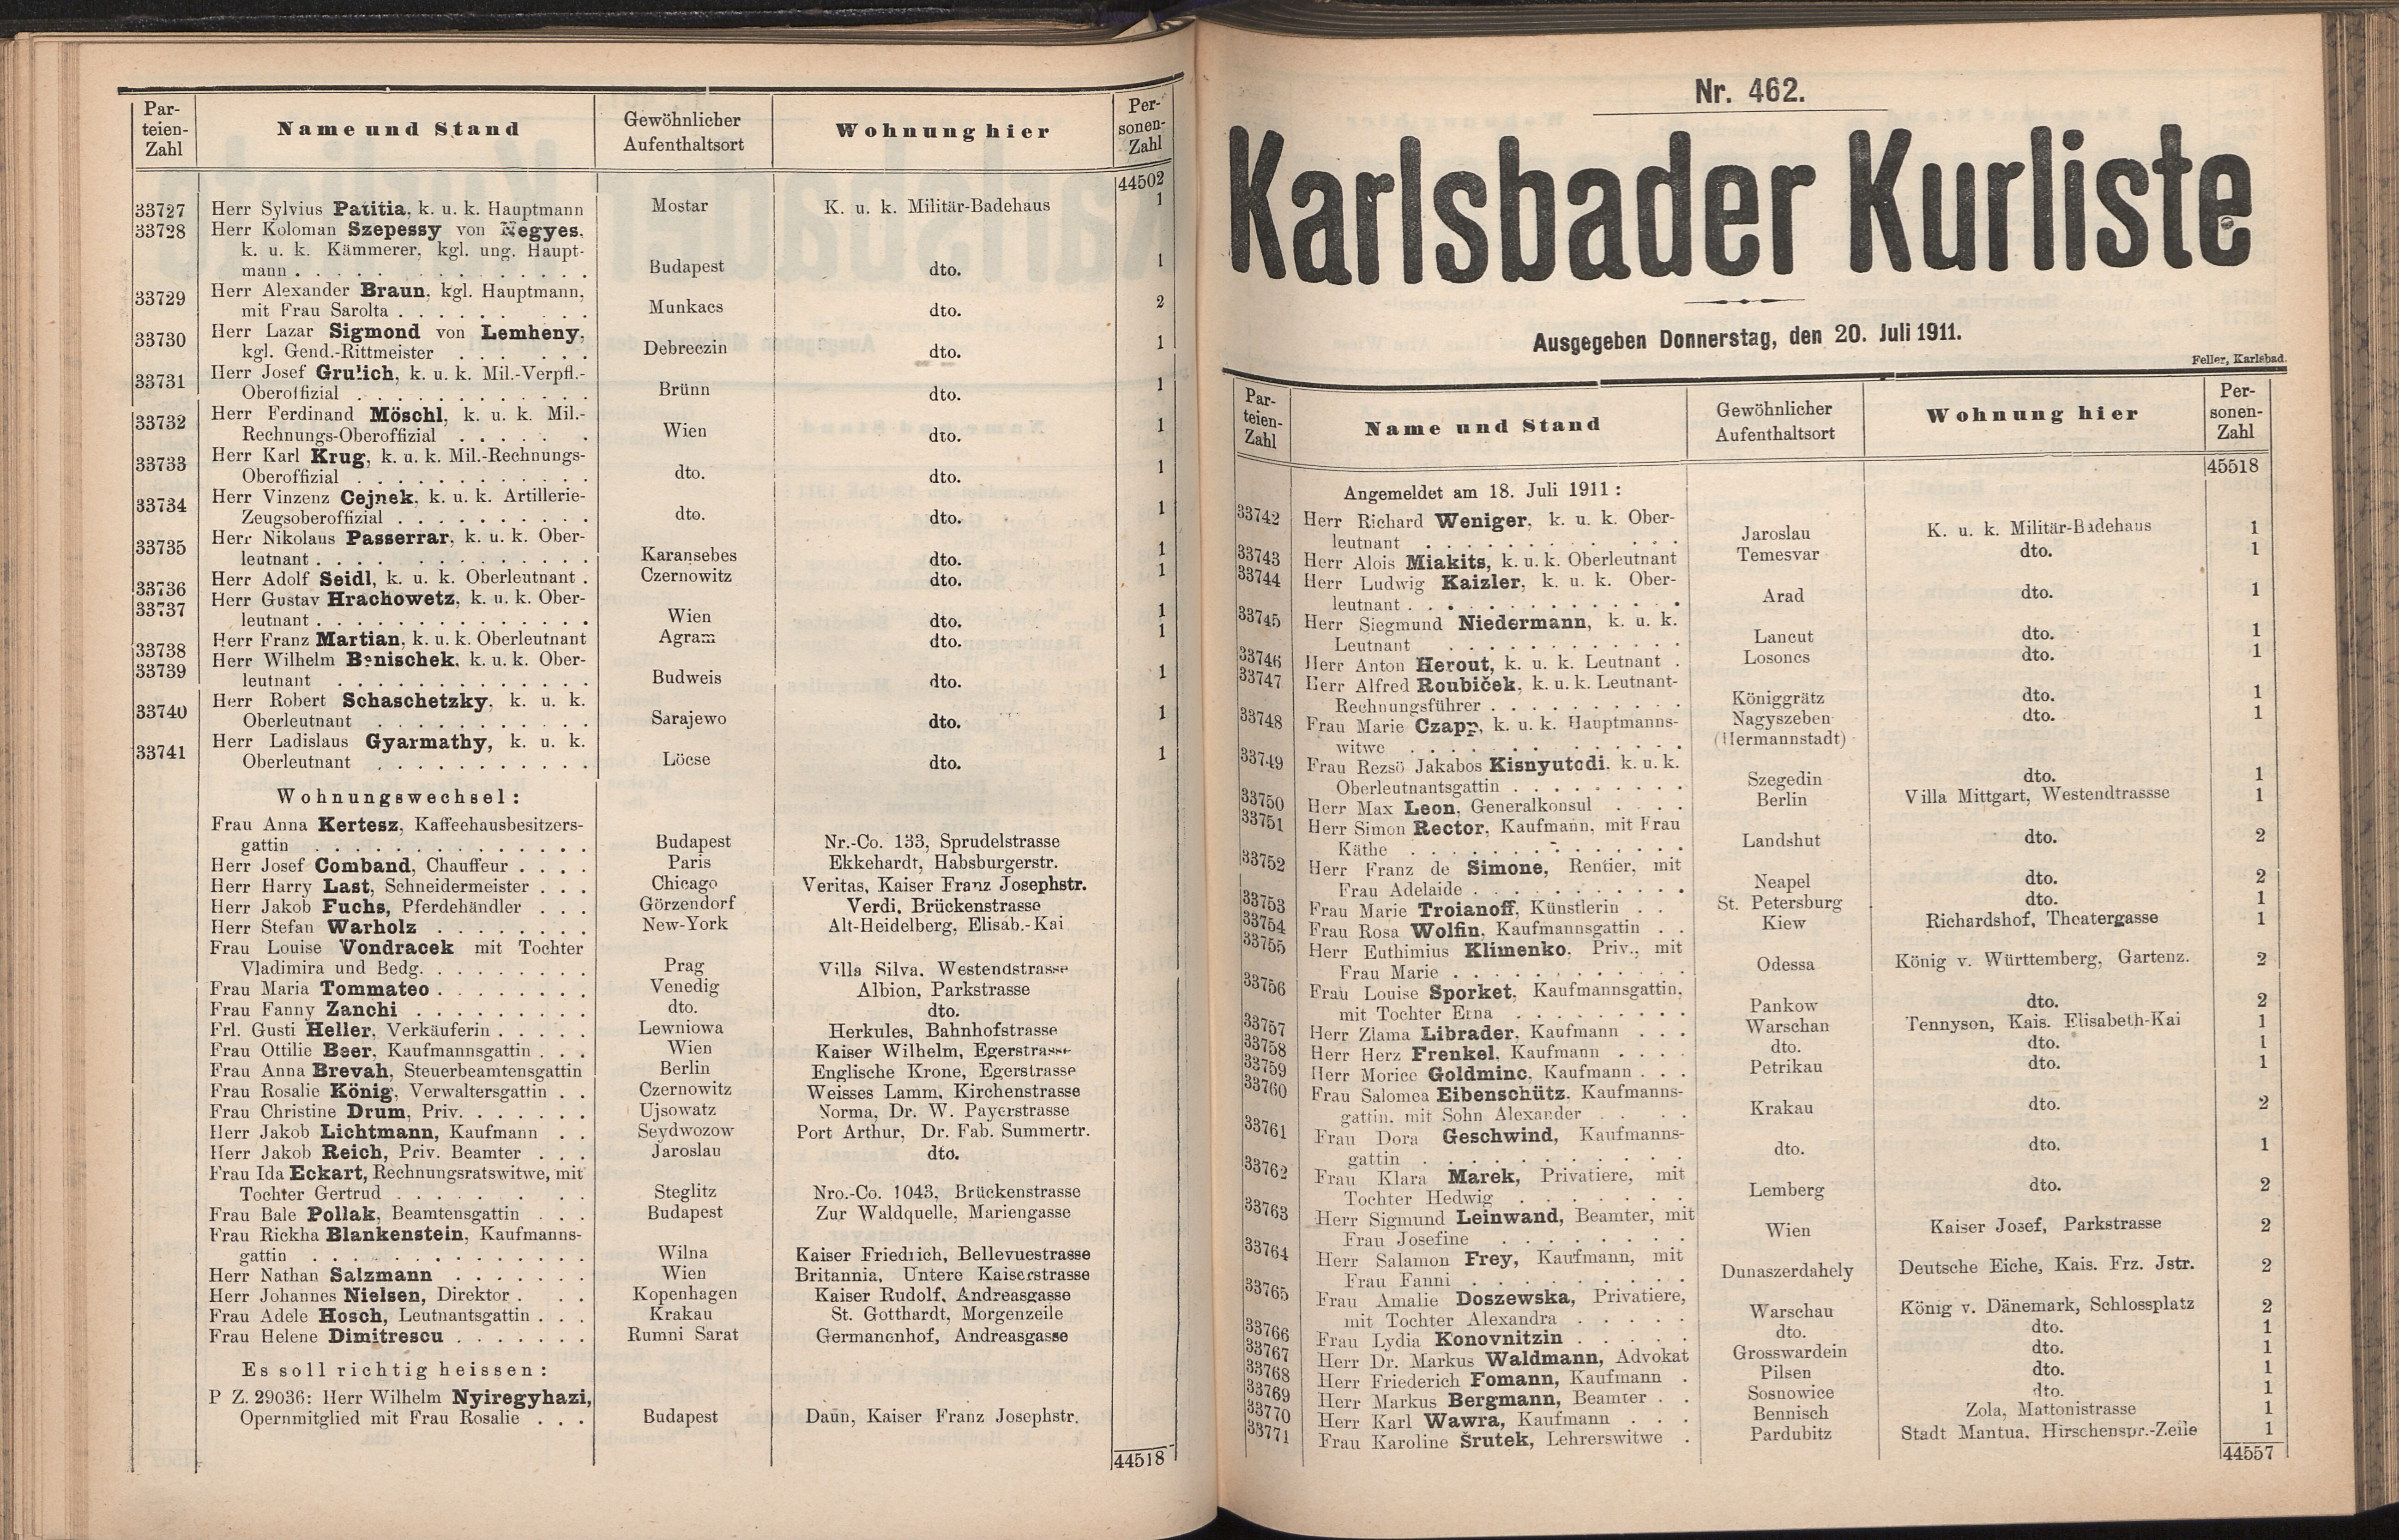 128. soap-kv_knihovna_karlsbader-kurliste-1911-2_1280